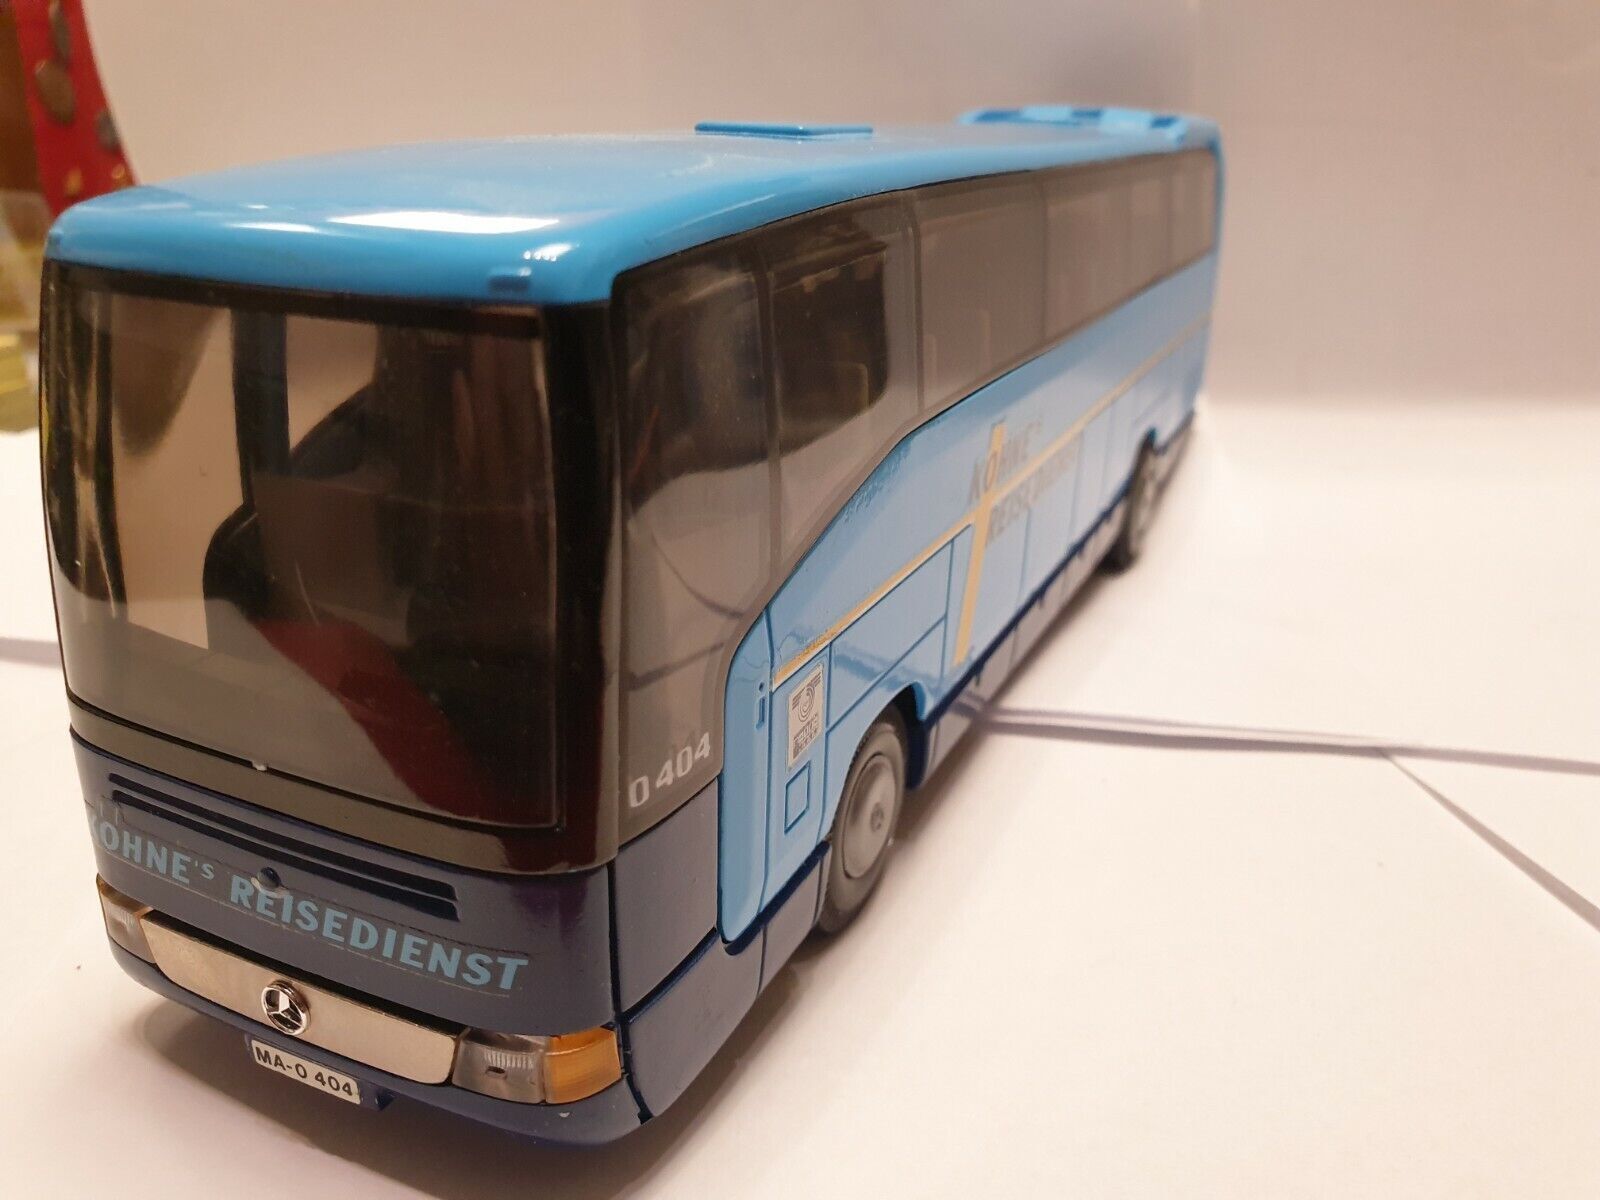 NZG M 1:43, Mercedes-Benz 0 404 SHD Blau No. 351 Köhne Reisedienst Bus